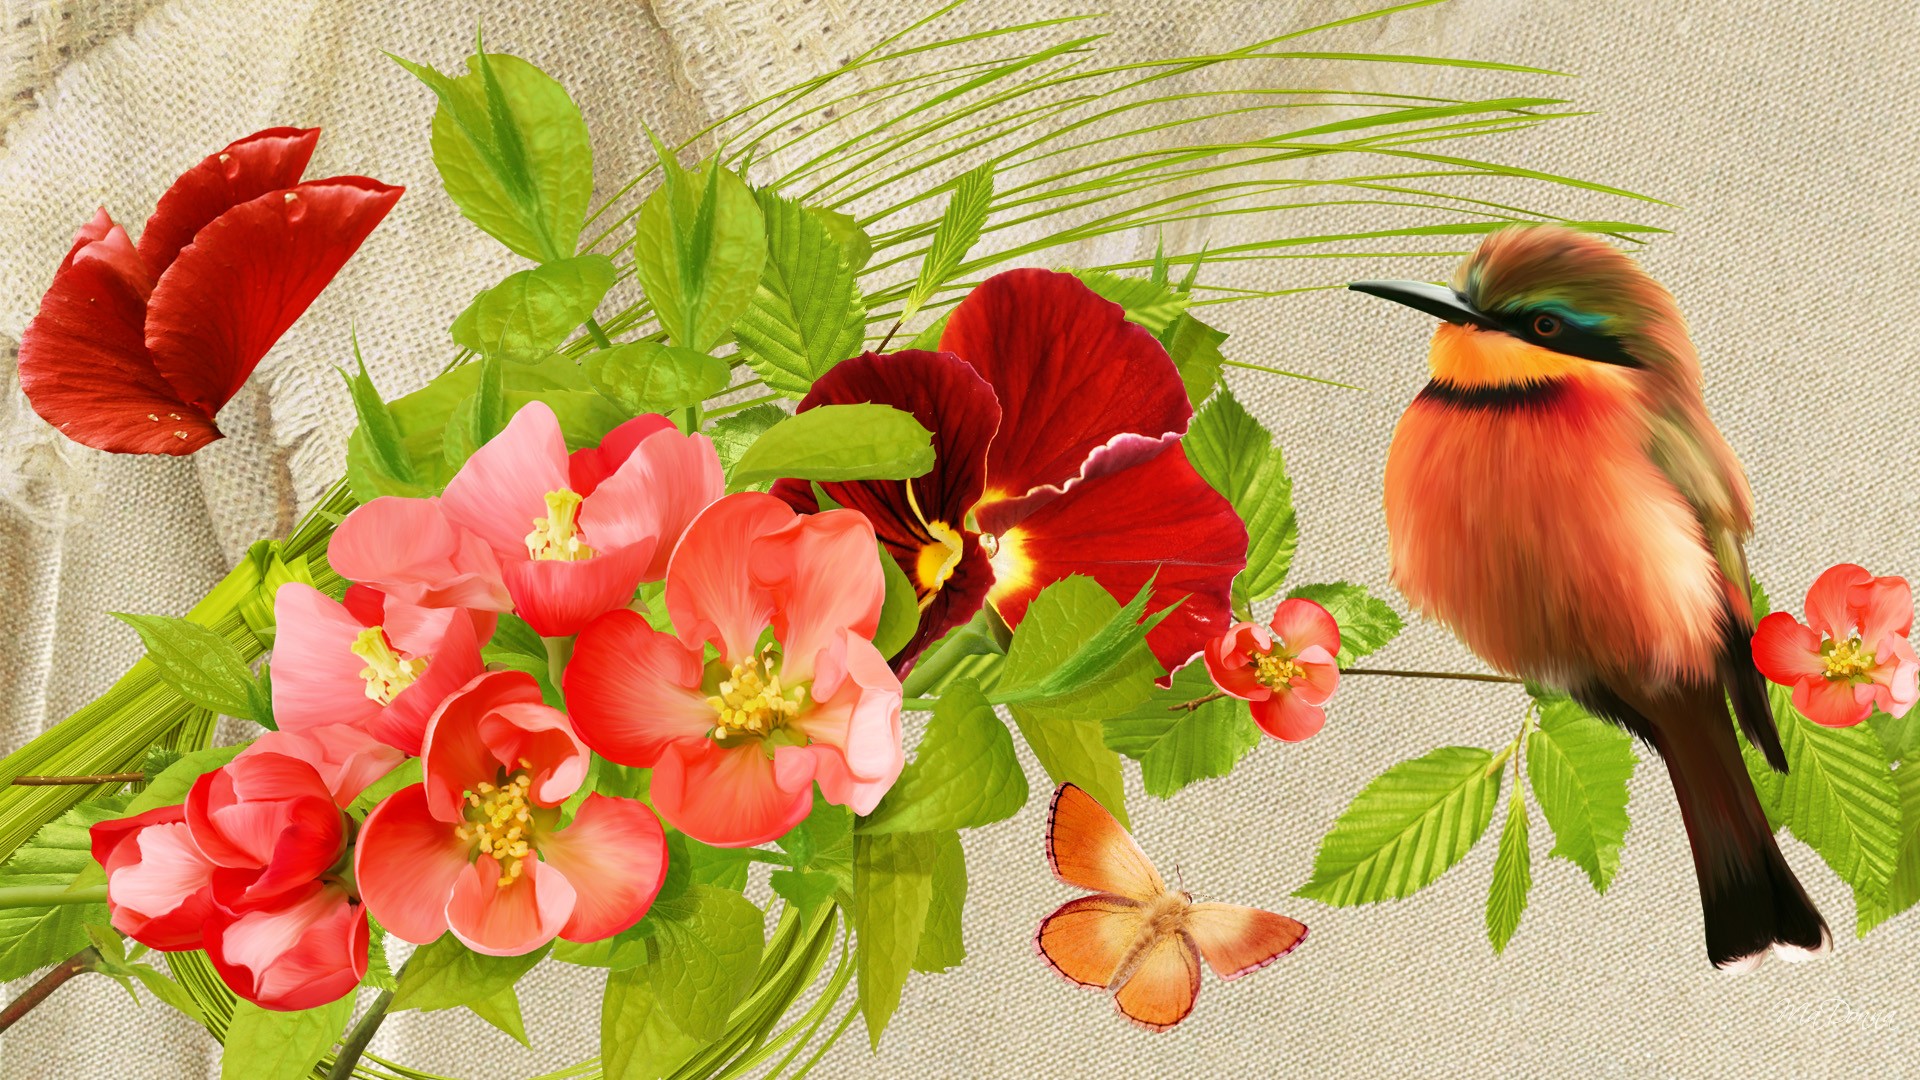 Pretty Birds Flowers wallpaper   ForWallpapercom